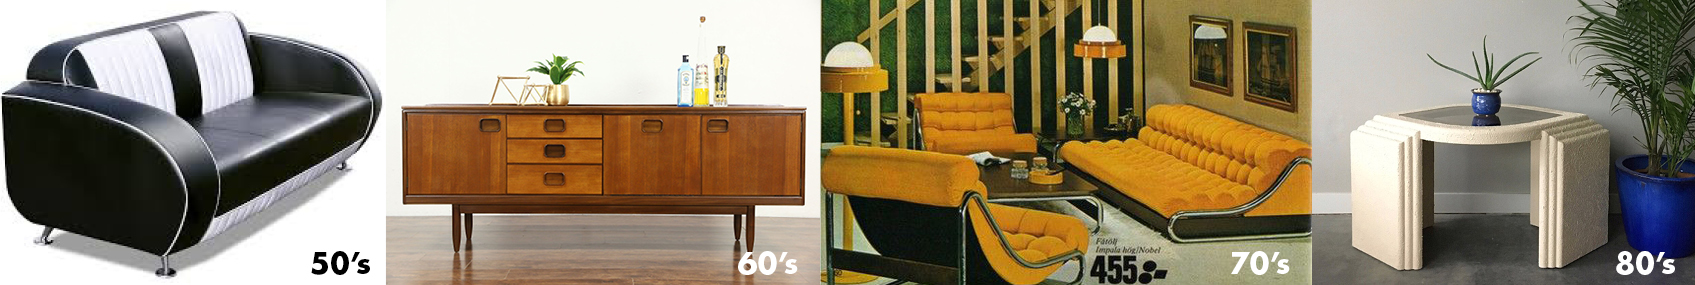 1950-1980 furn styles